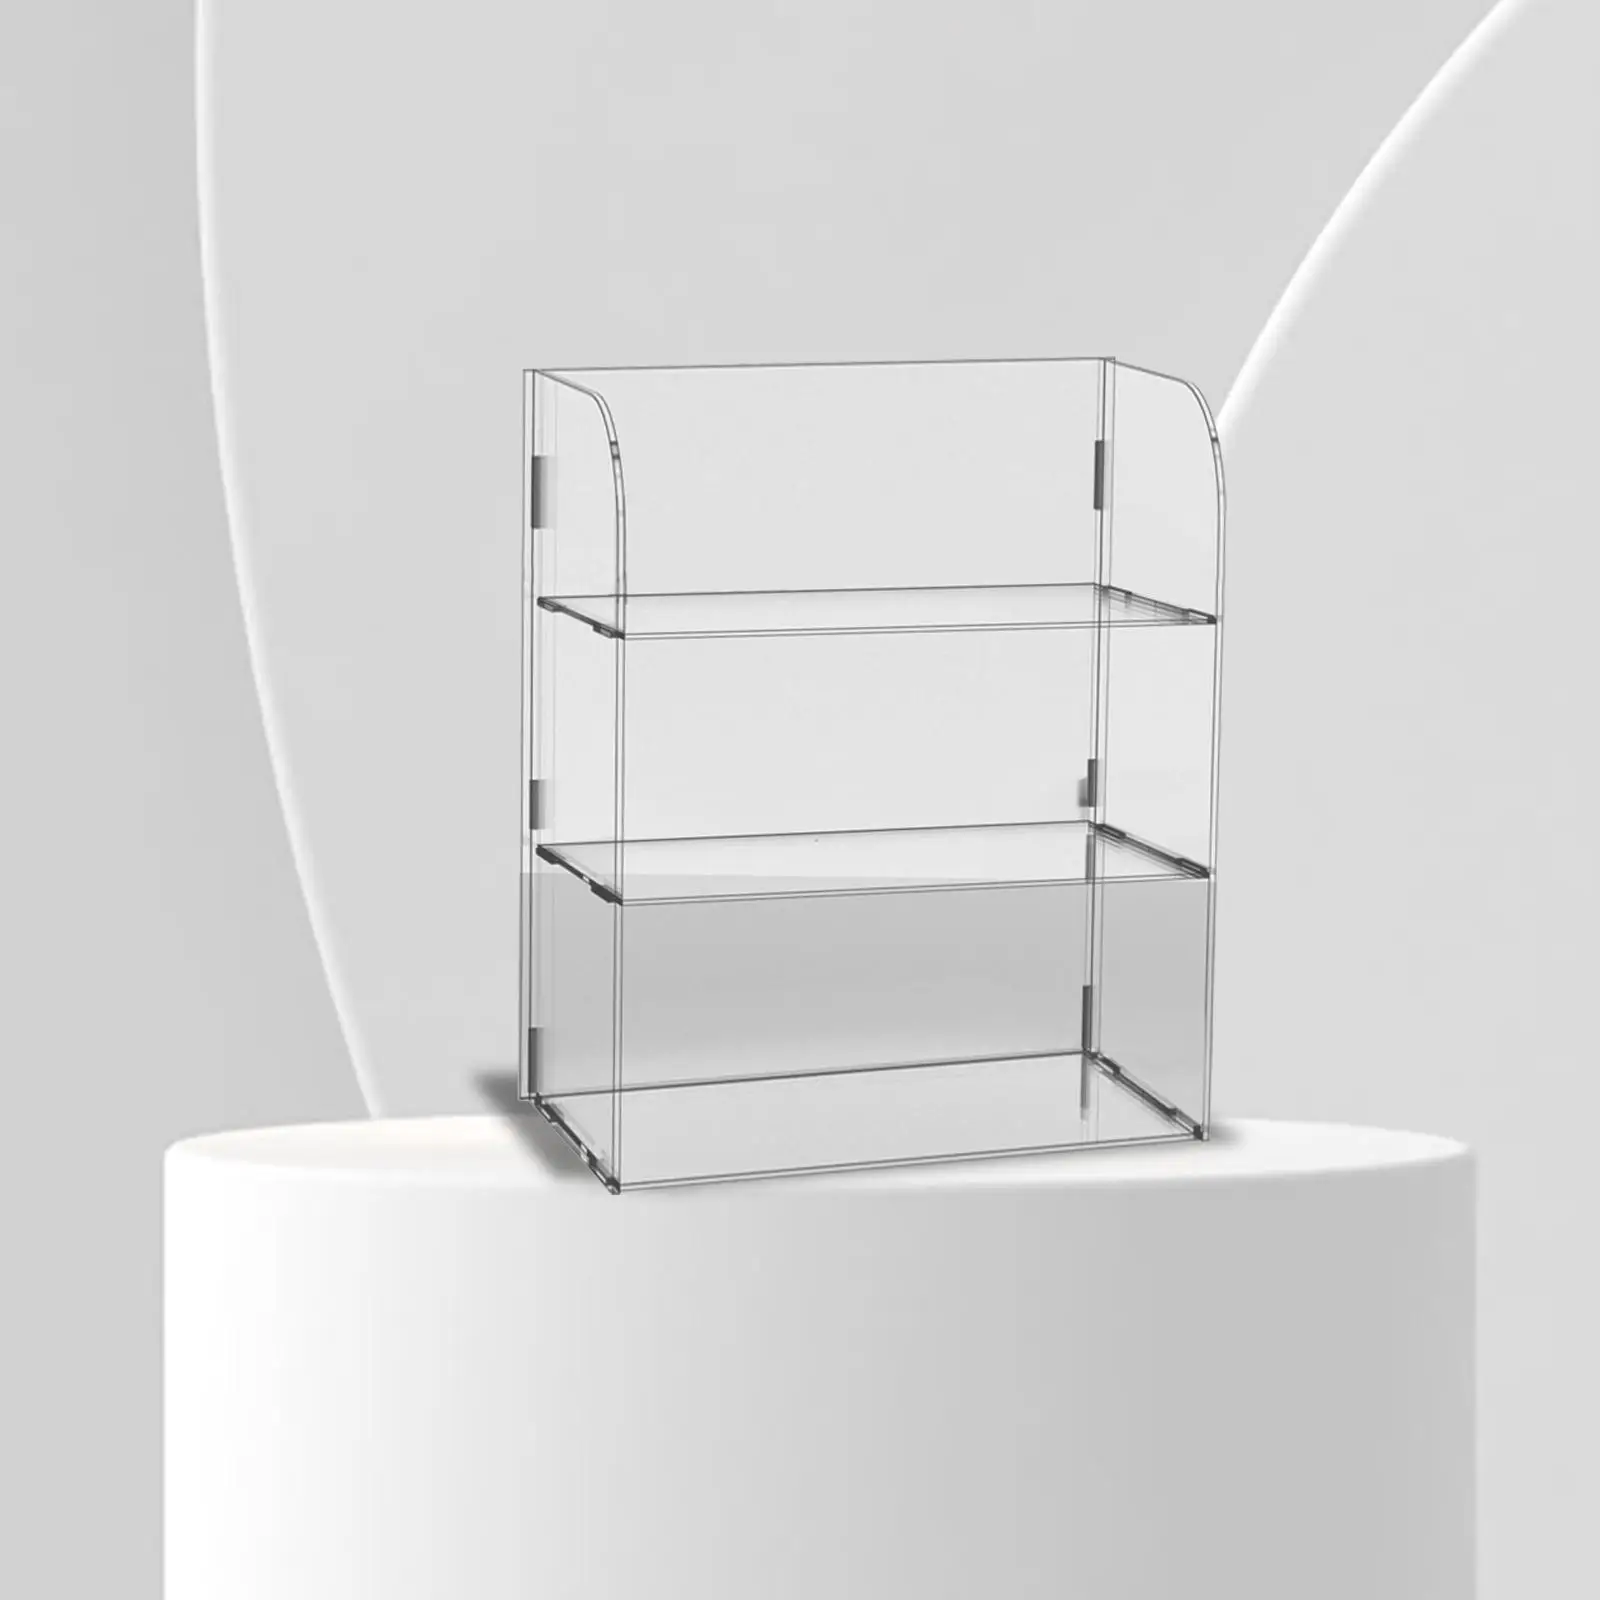 Multi Purpose Acrylic Display Rack Stand Risers Showcase Shelves Desktop Toy